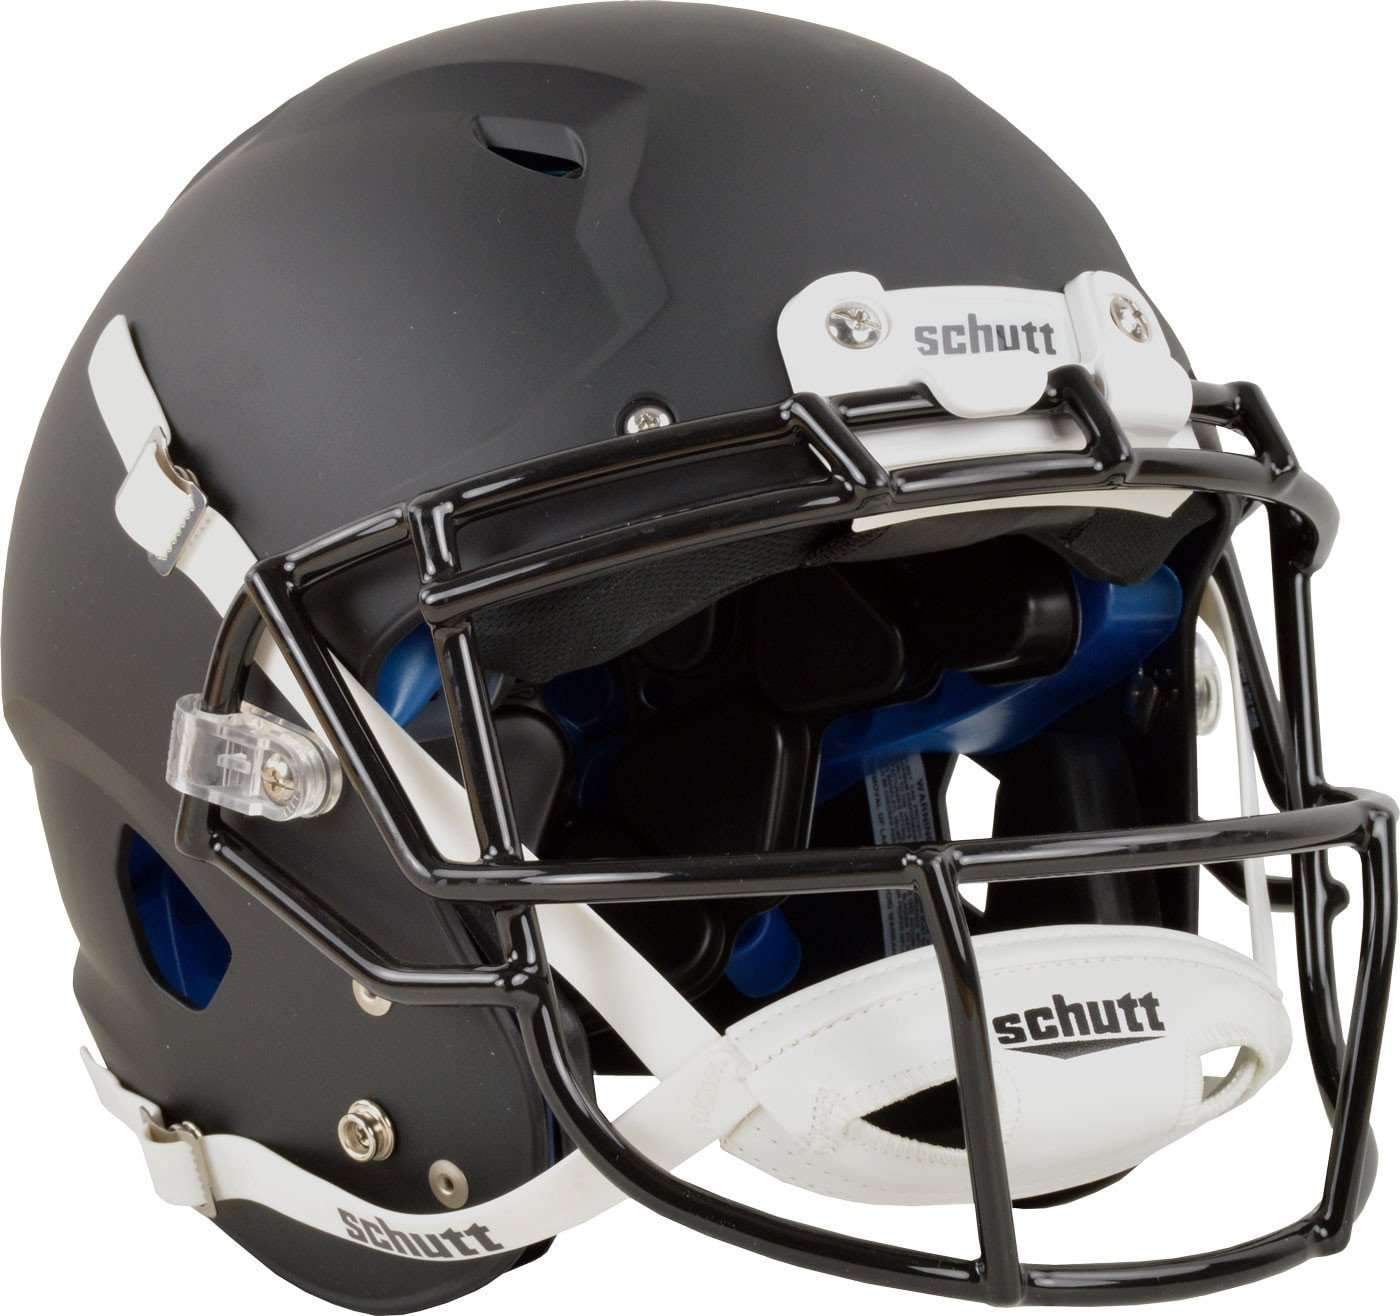 Schutt Adult Vengeance Pro Football Helmet - 5 Star Rated 